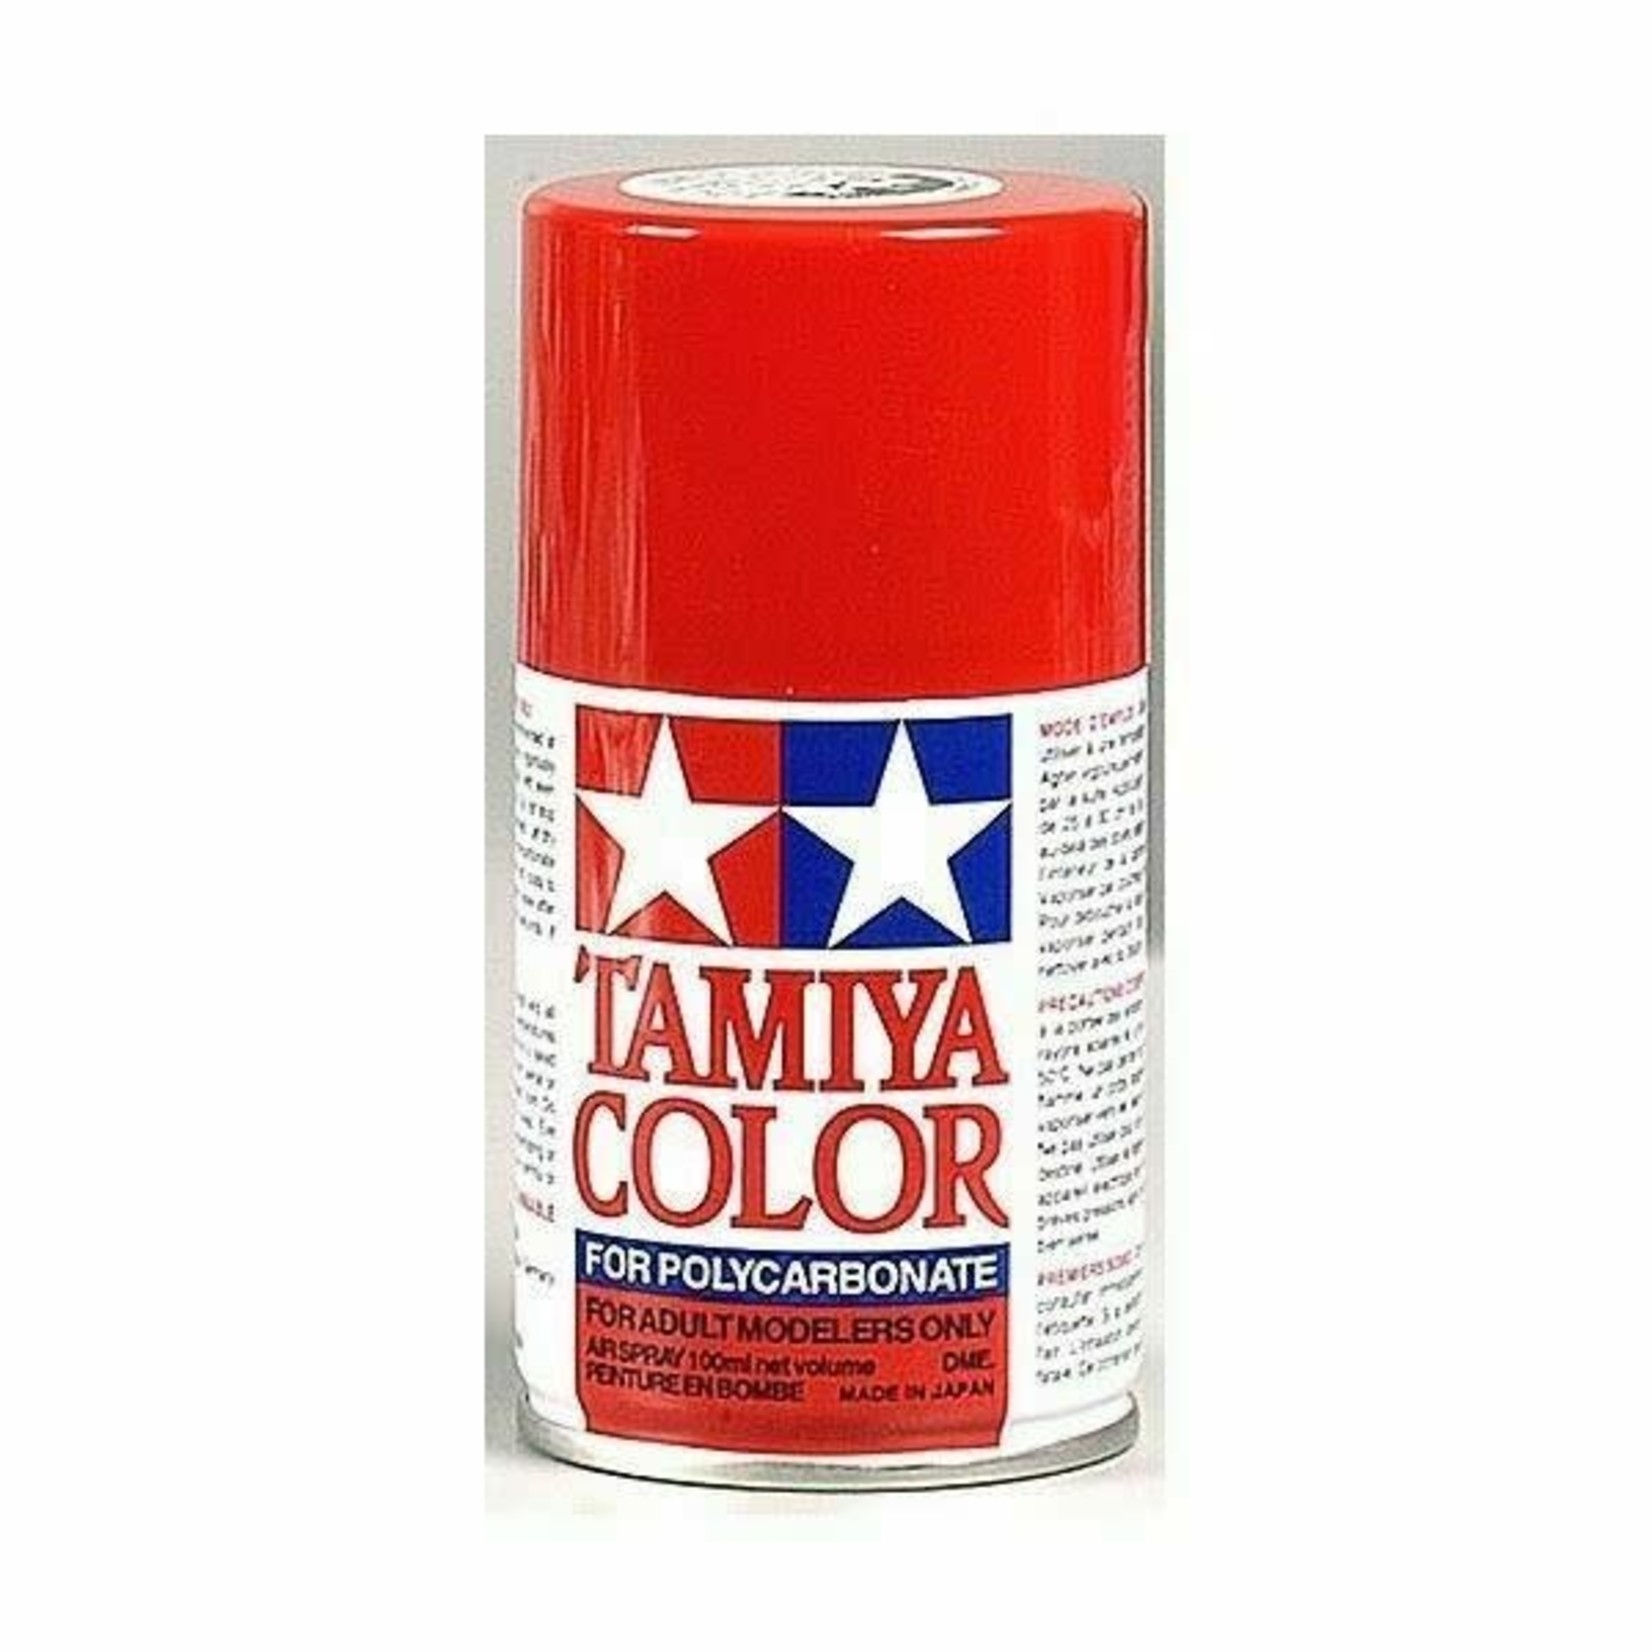 Tamiya Tamiya aerosol for polycarbonate